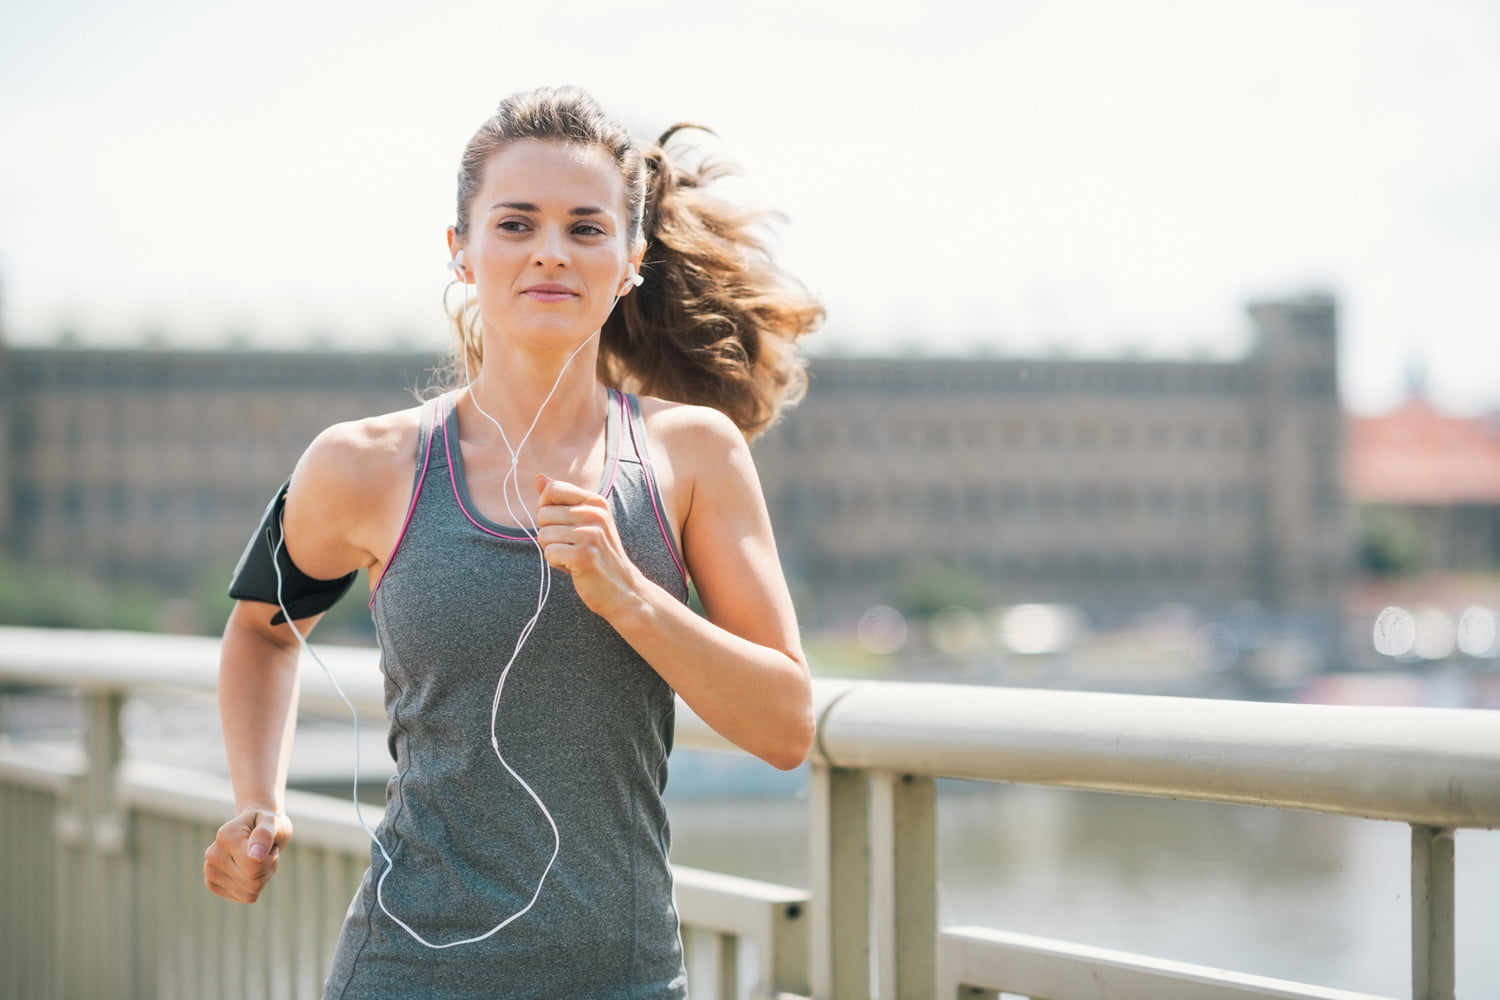 A woman jogging on a bridge with earphones.